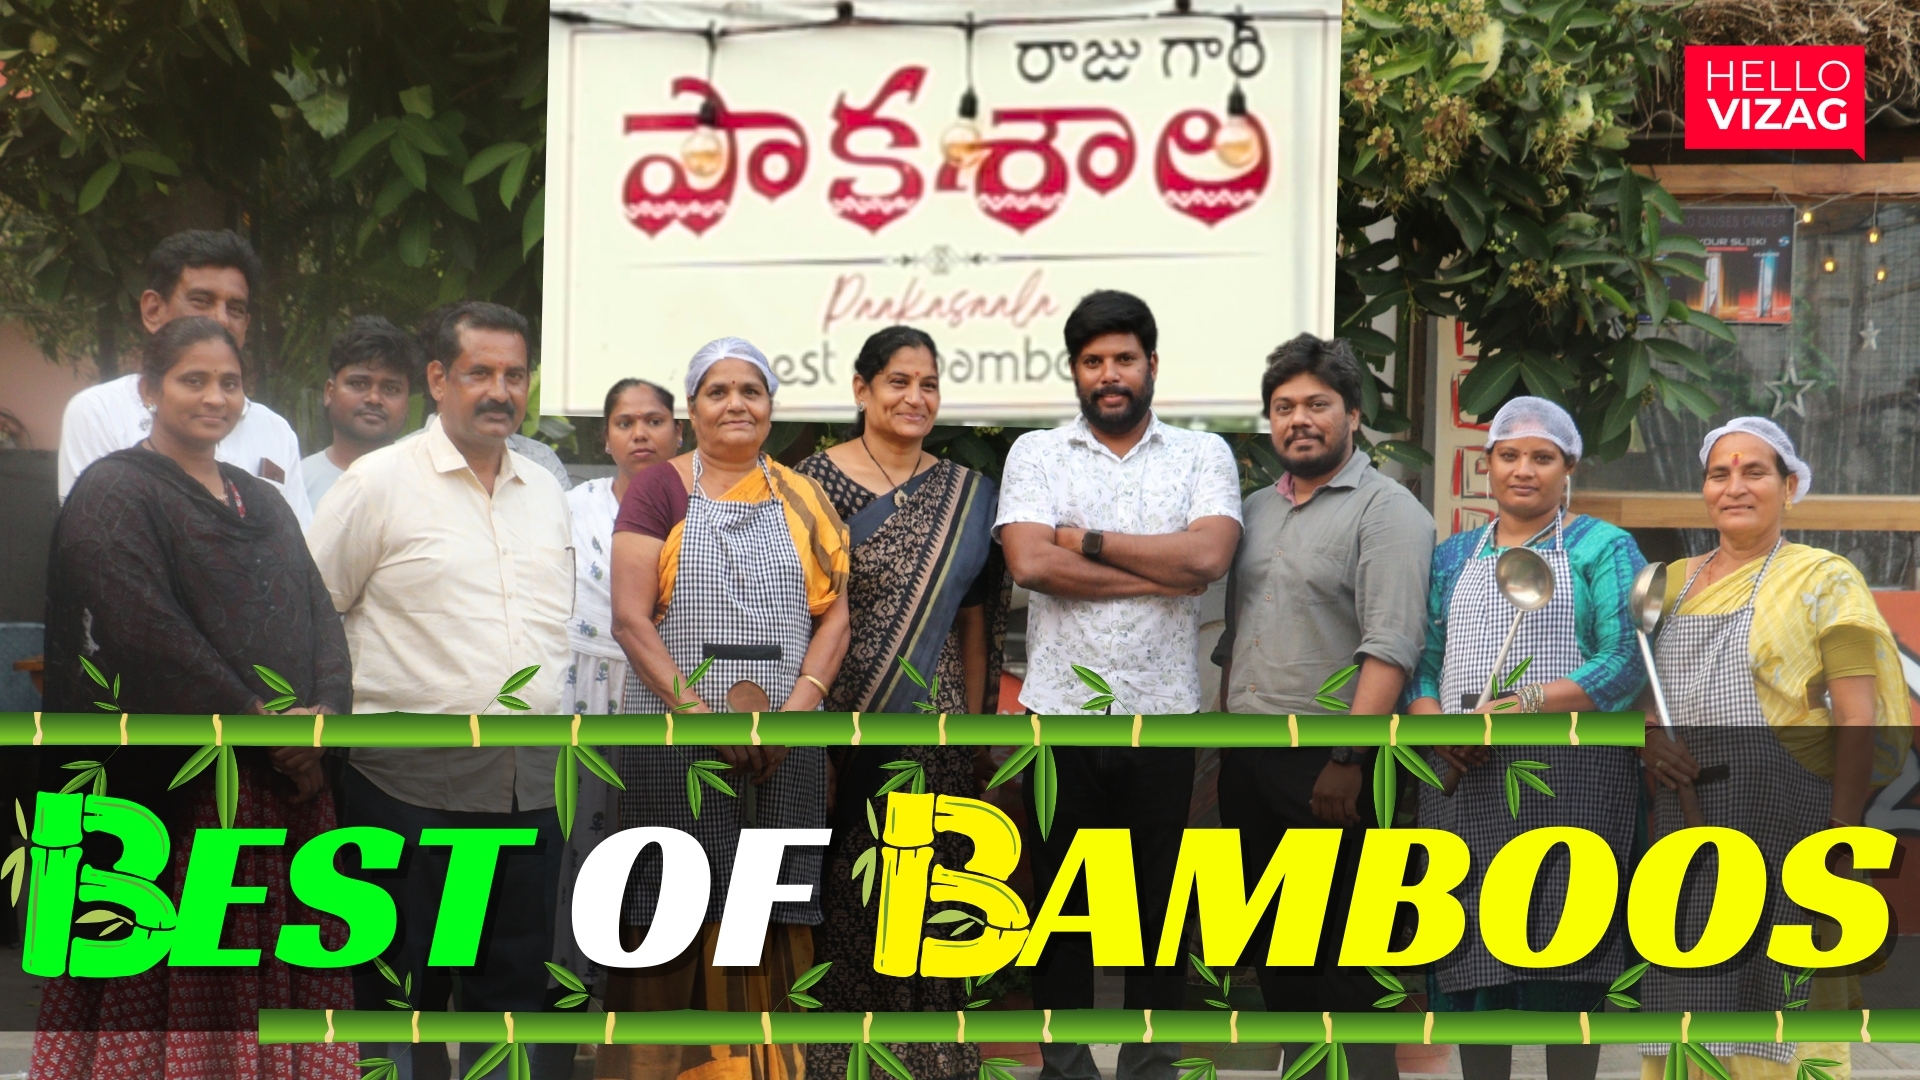 Raaju Gaari Paakasaala | Best of Bamboos | Rushikonda | Visakhapatnam | Hello Vizag